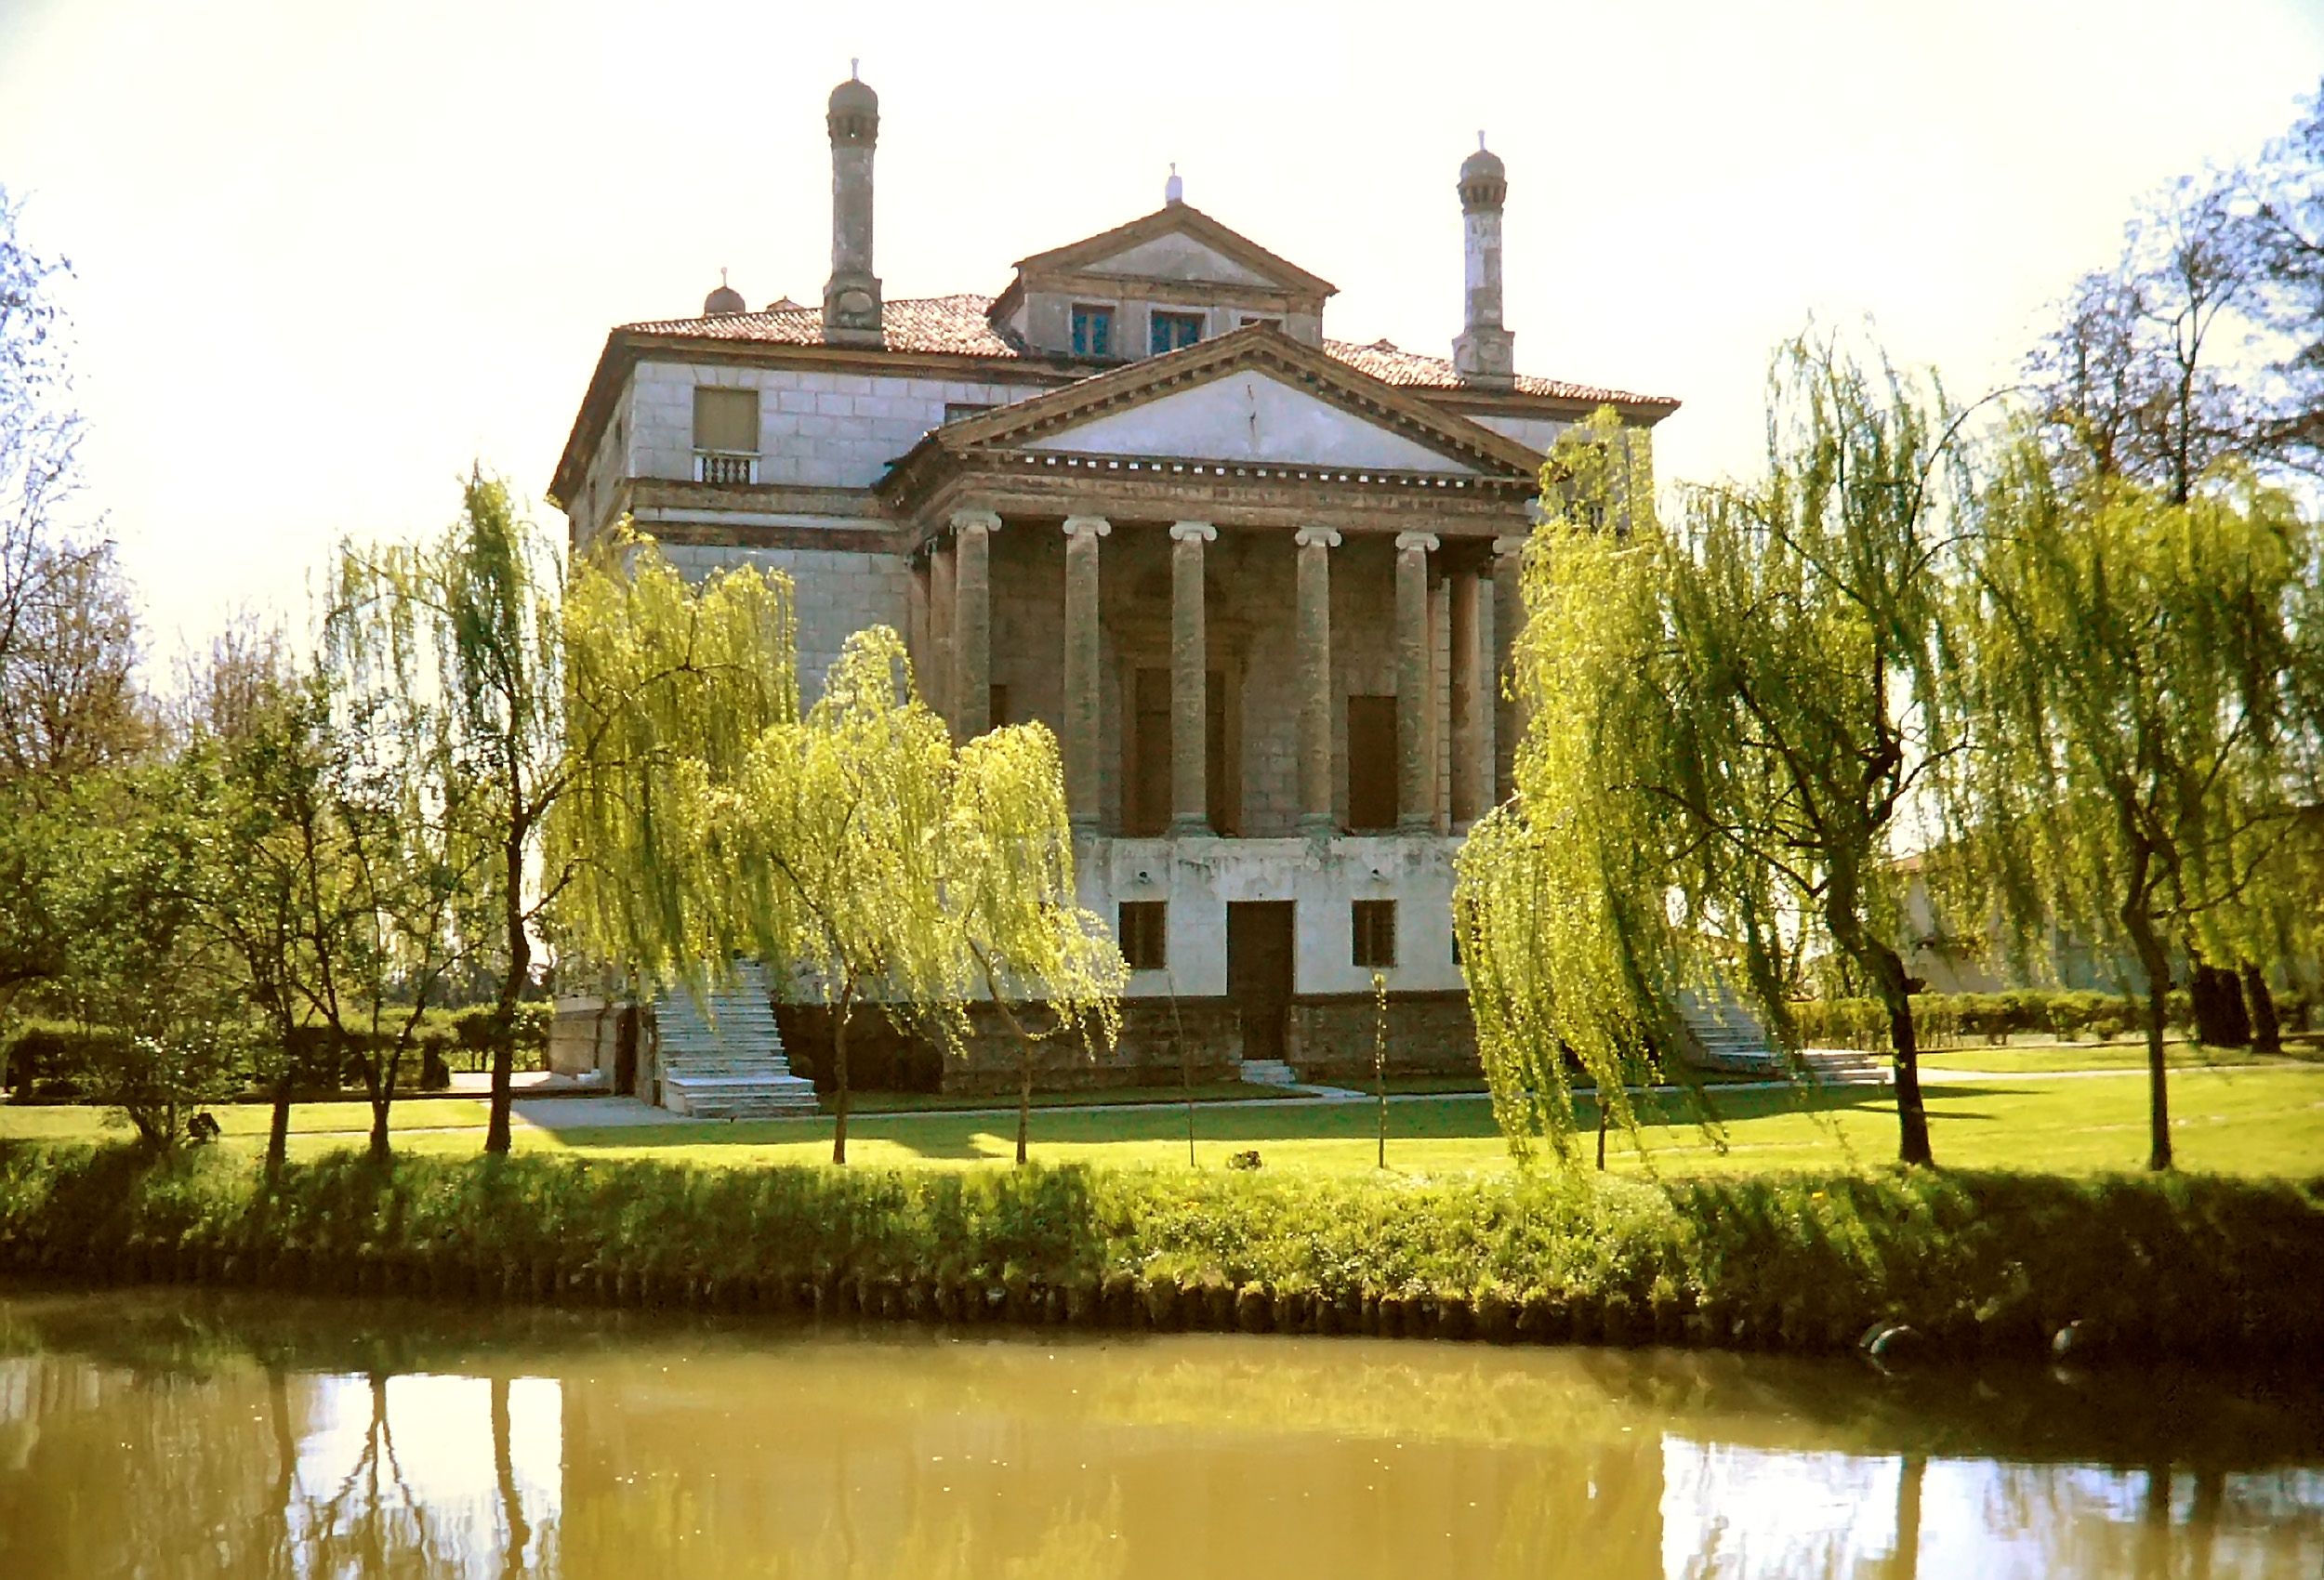 Villa Foscari also known as "La Malcontenta", Mira (VE), Italy